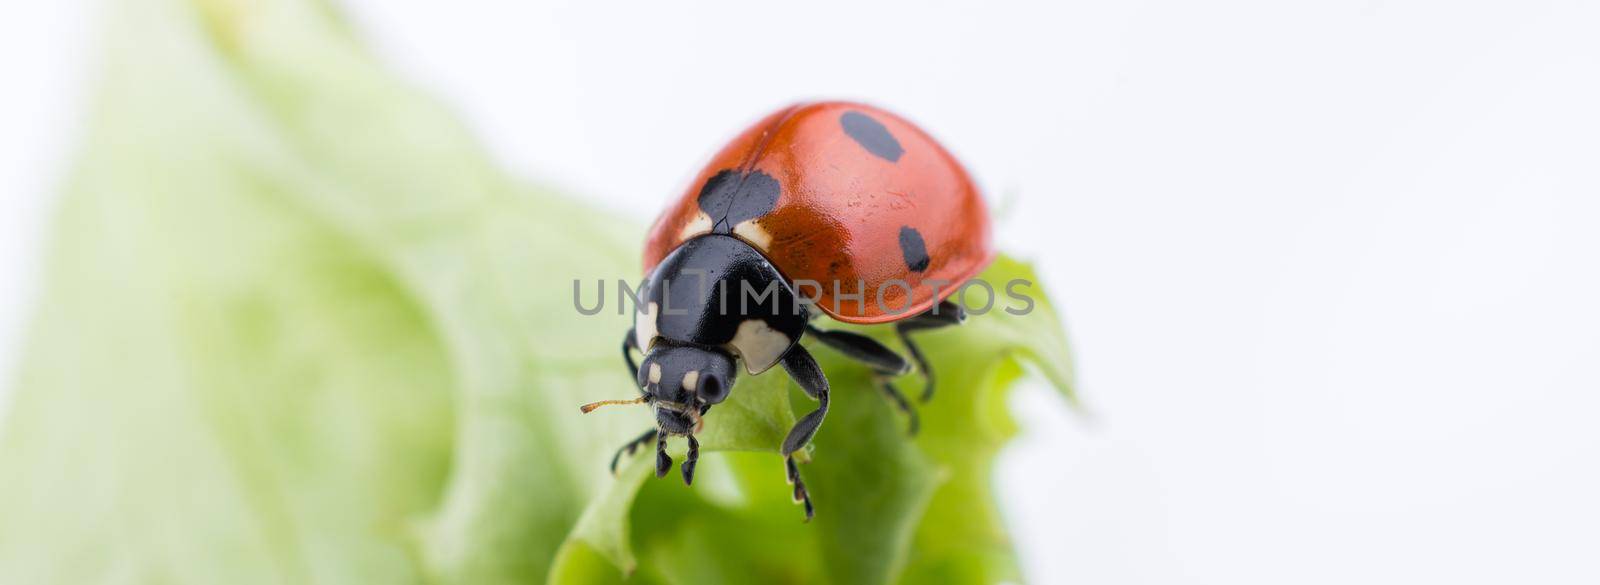 Beautiful red ladybug walking on lettuce by berkay